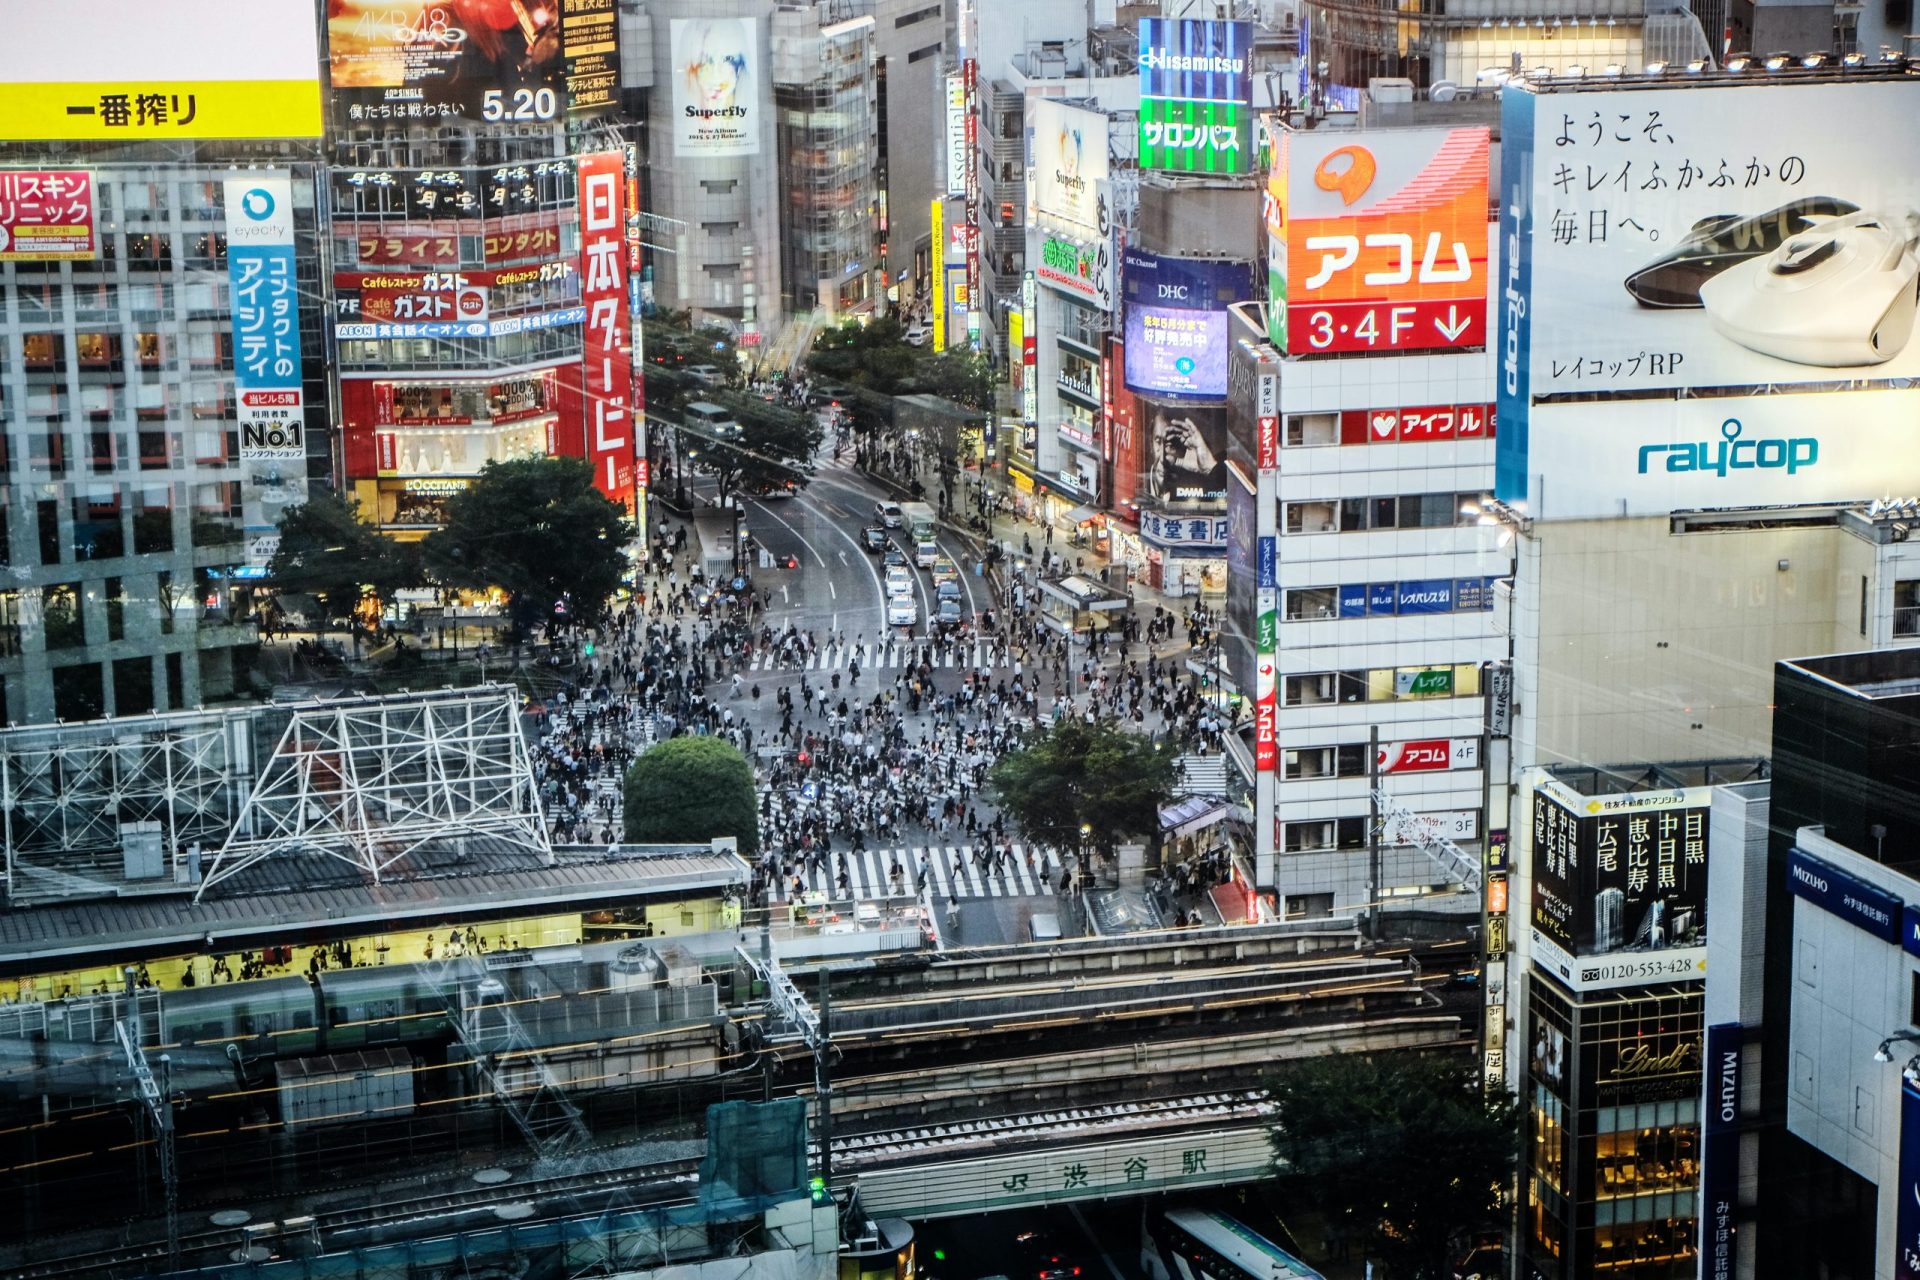 buildings with people in shibuya crossing